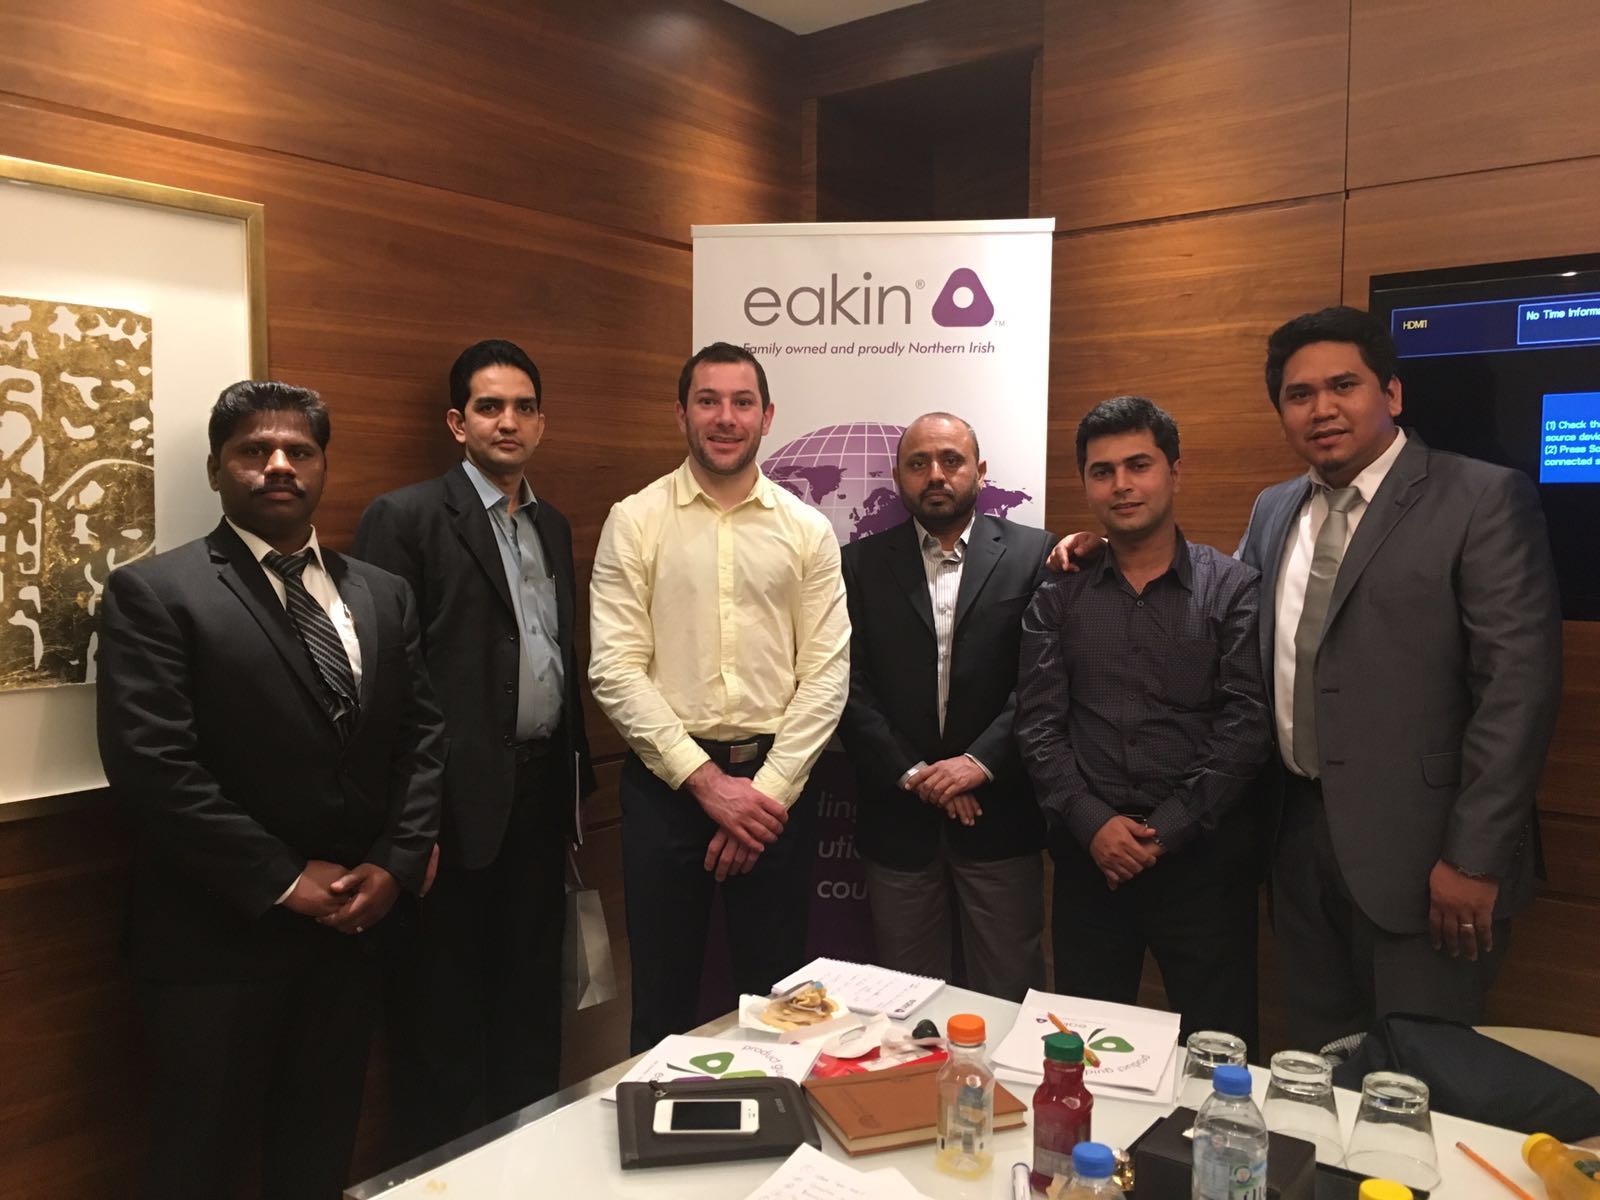 eakin sales reps at a training seminar in Dubai